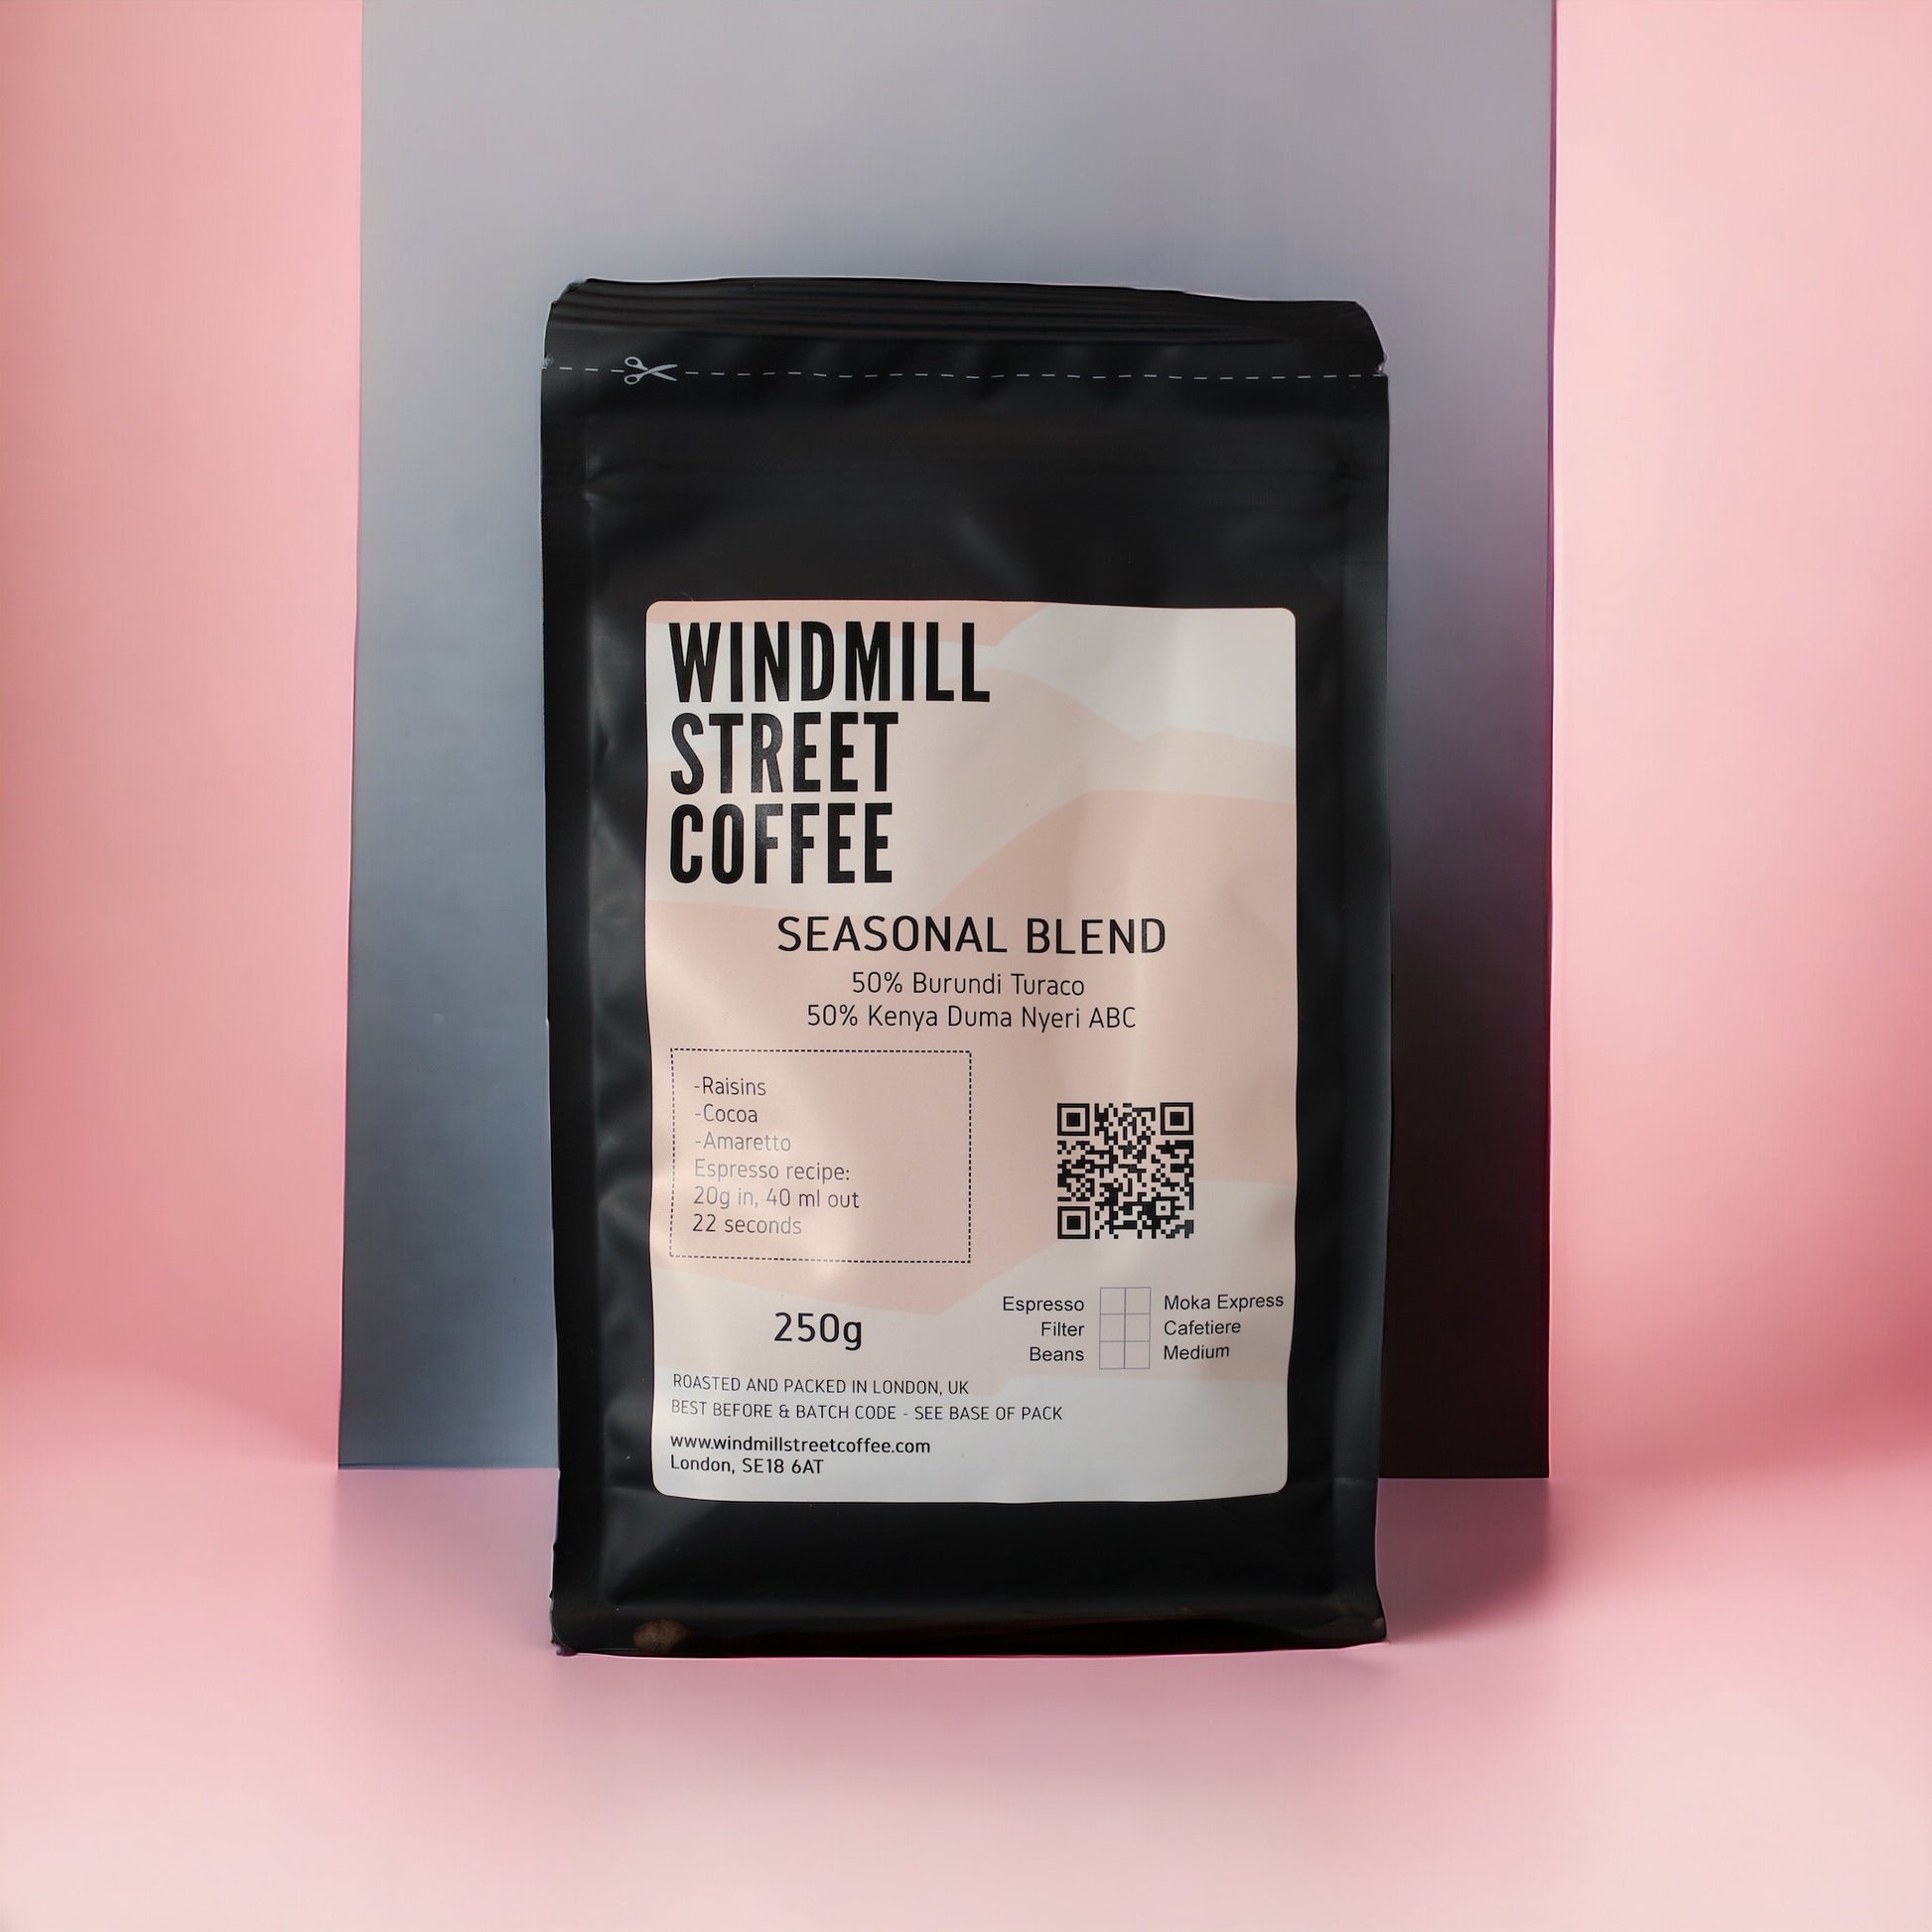 Windmill Street Coffee - Seasonal Blend